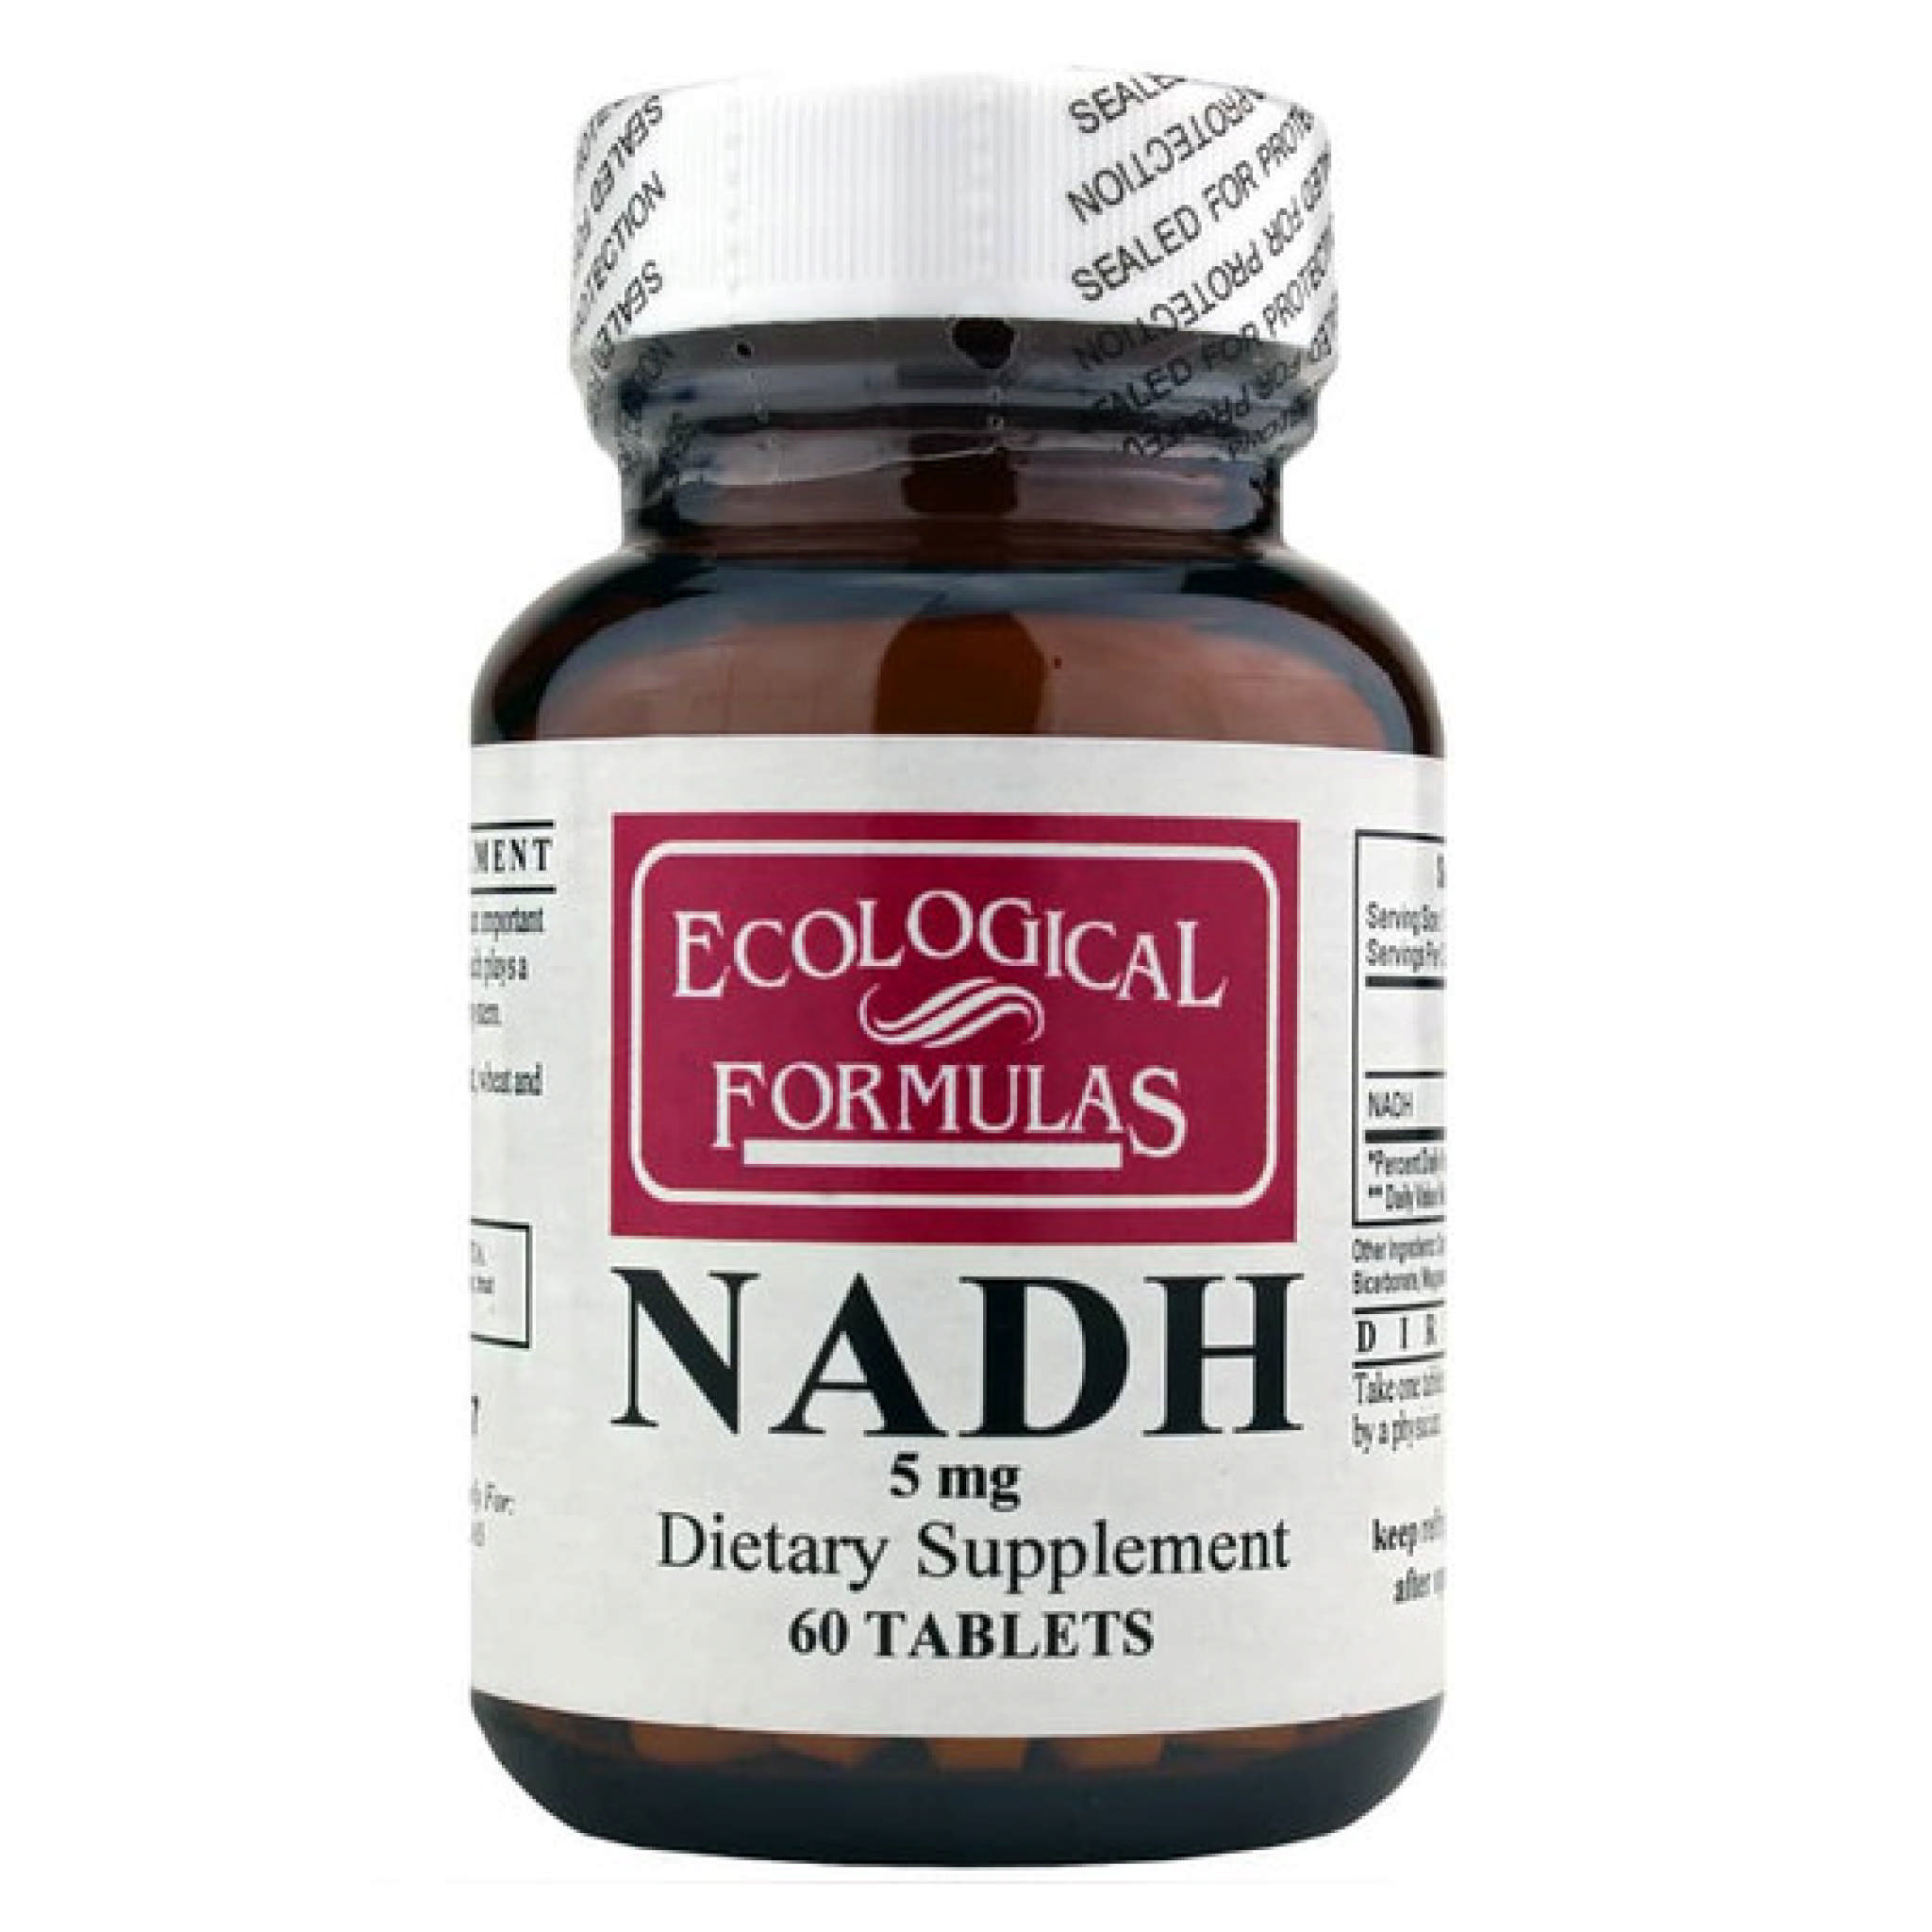 Ecological Formulas - Nadh 5 mg